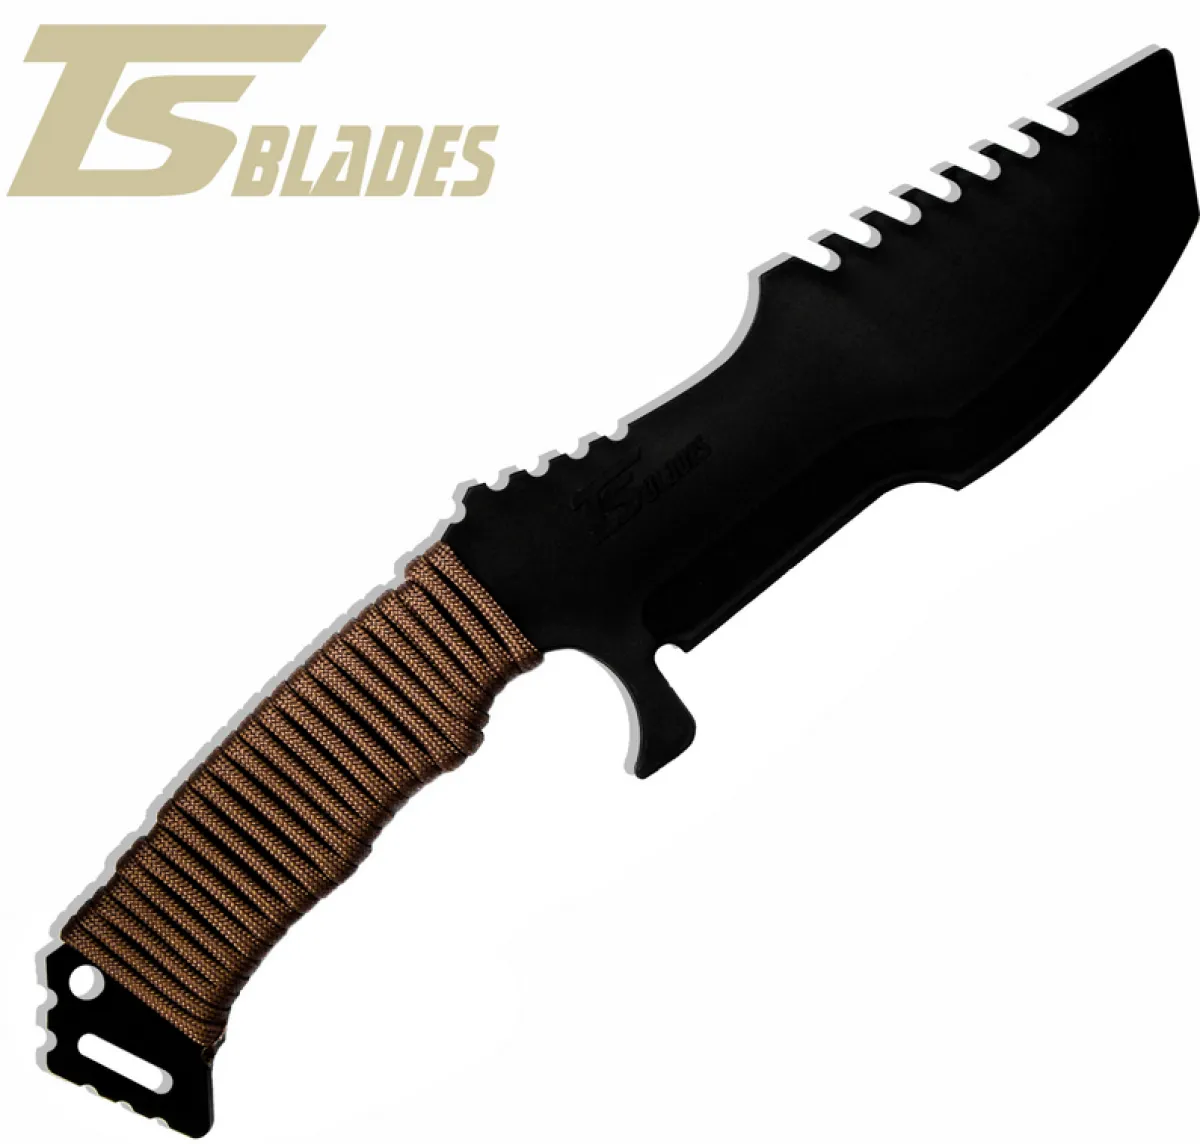 TS-BLADES HUNTSMAN G3 GRIP COYOTE BROWN PARACORD DUMMY KNIFE